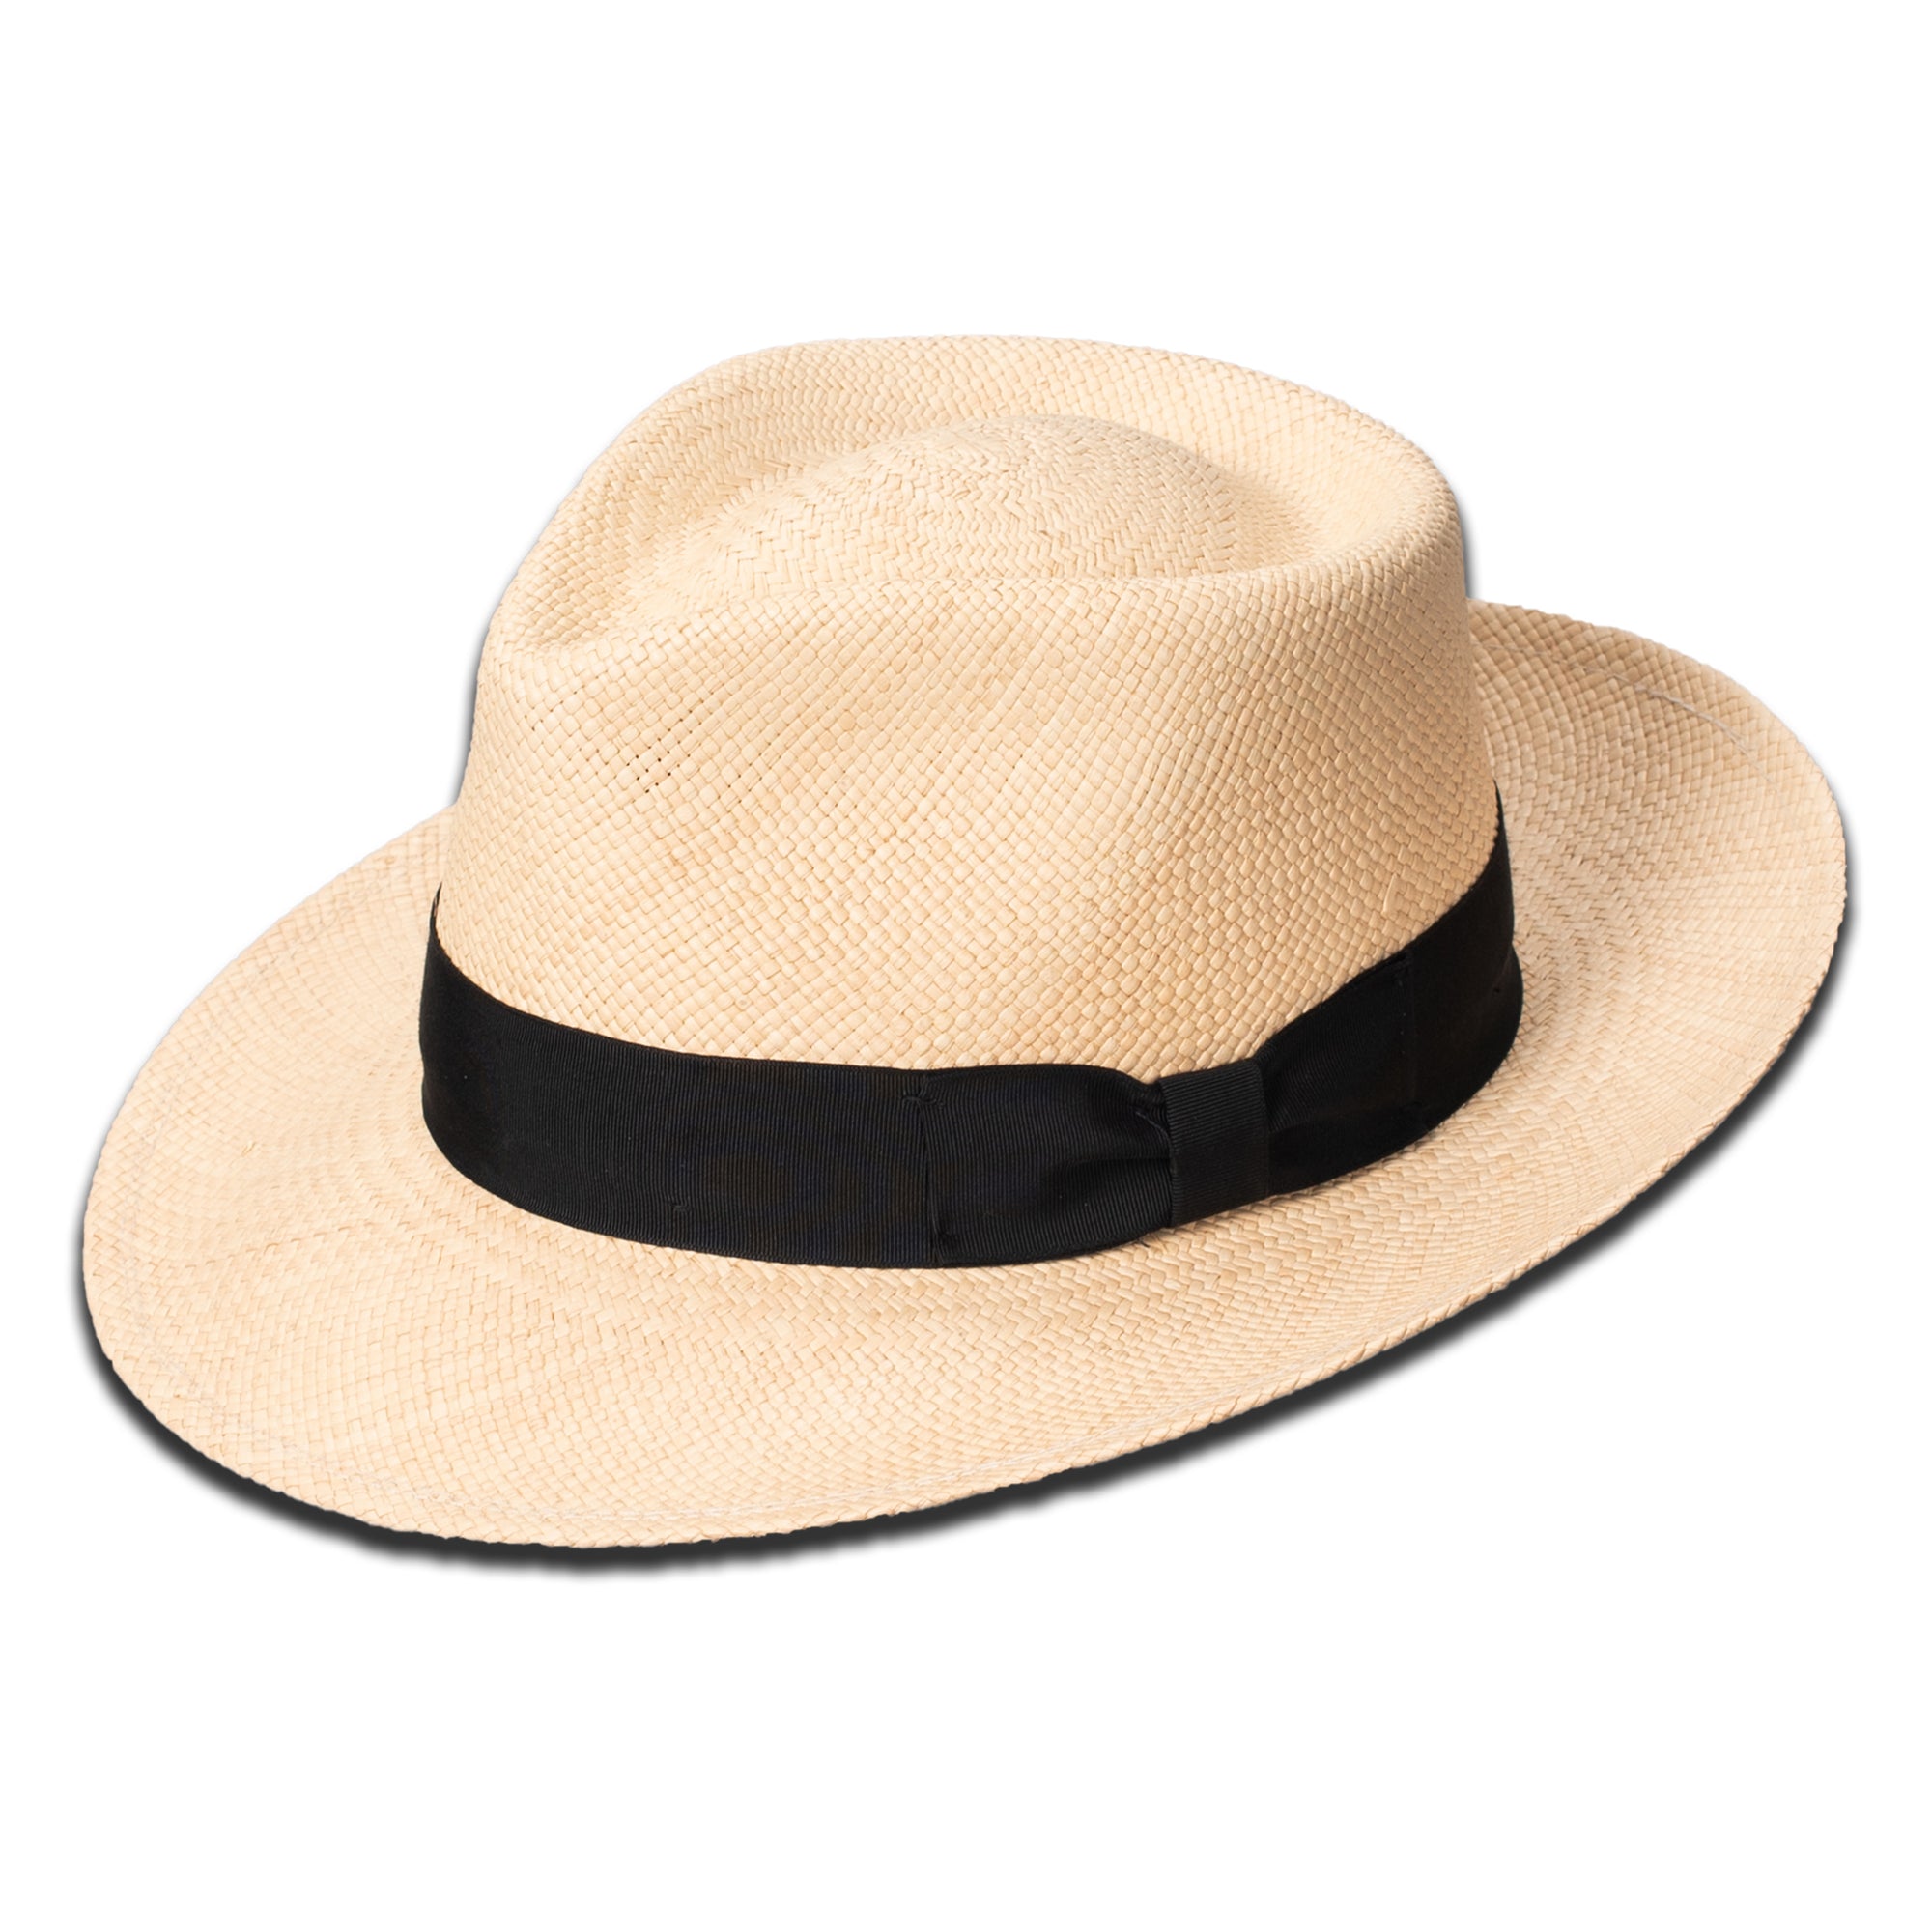 Bogart Panama Hat by Capas